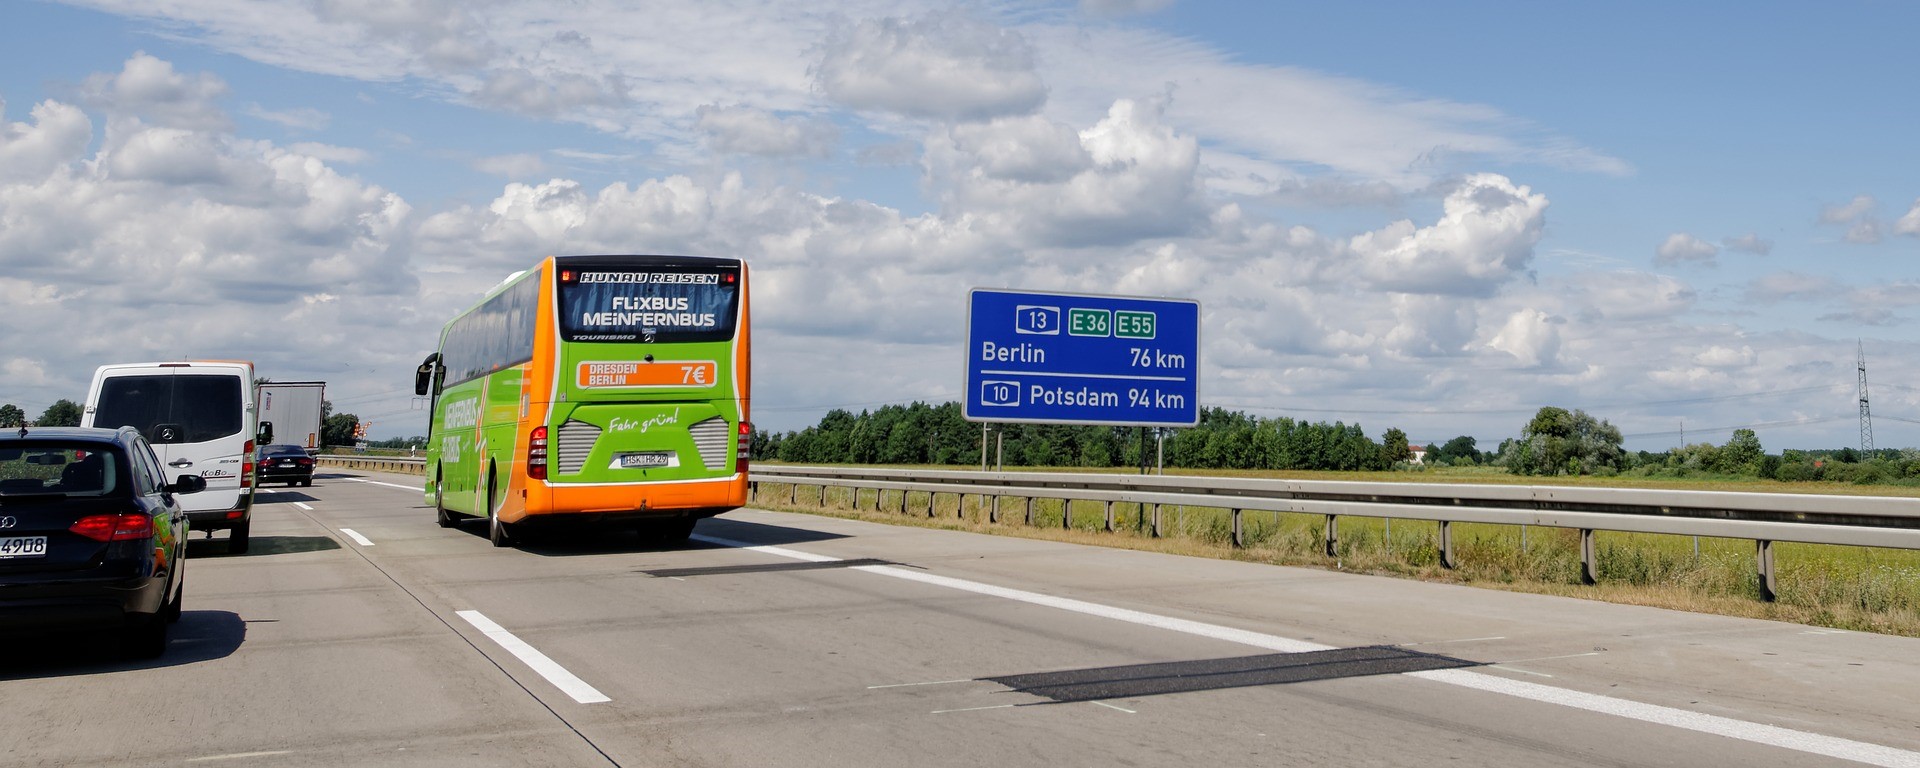 flixbus-autobuske-karte-prevoz (2)